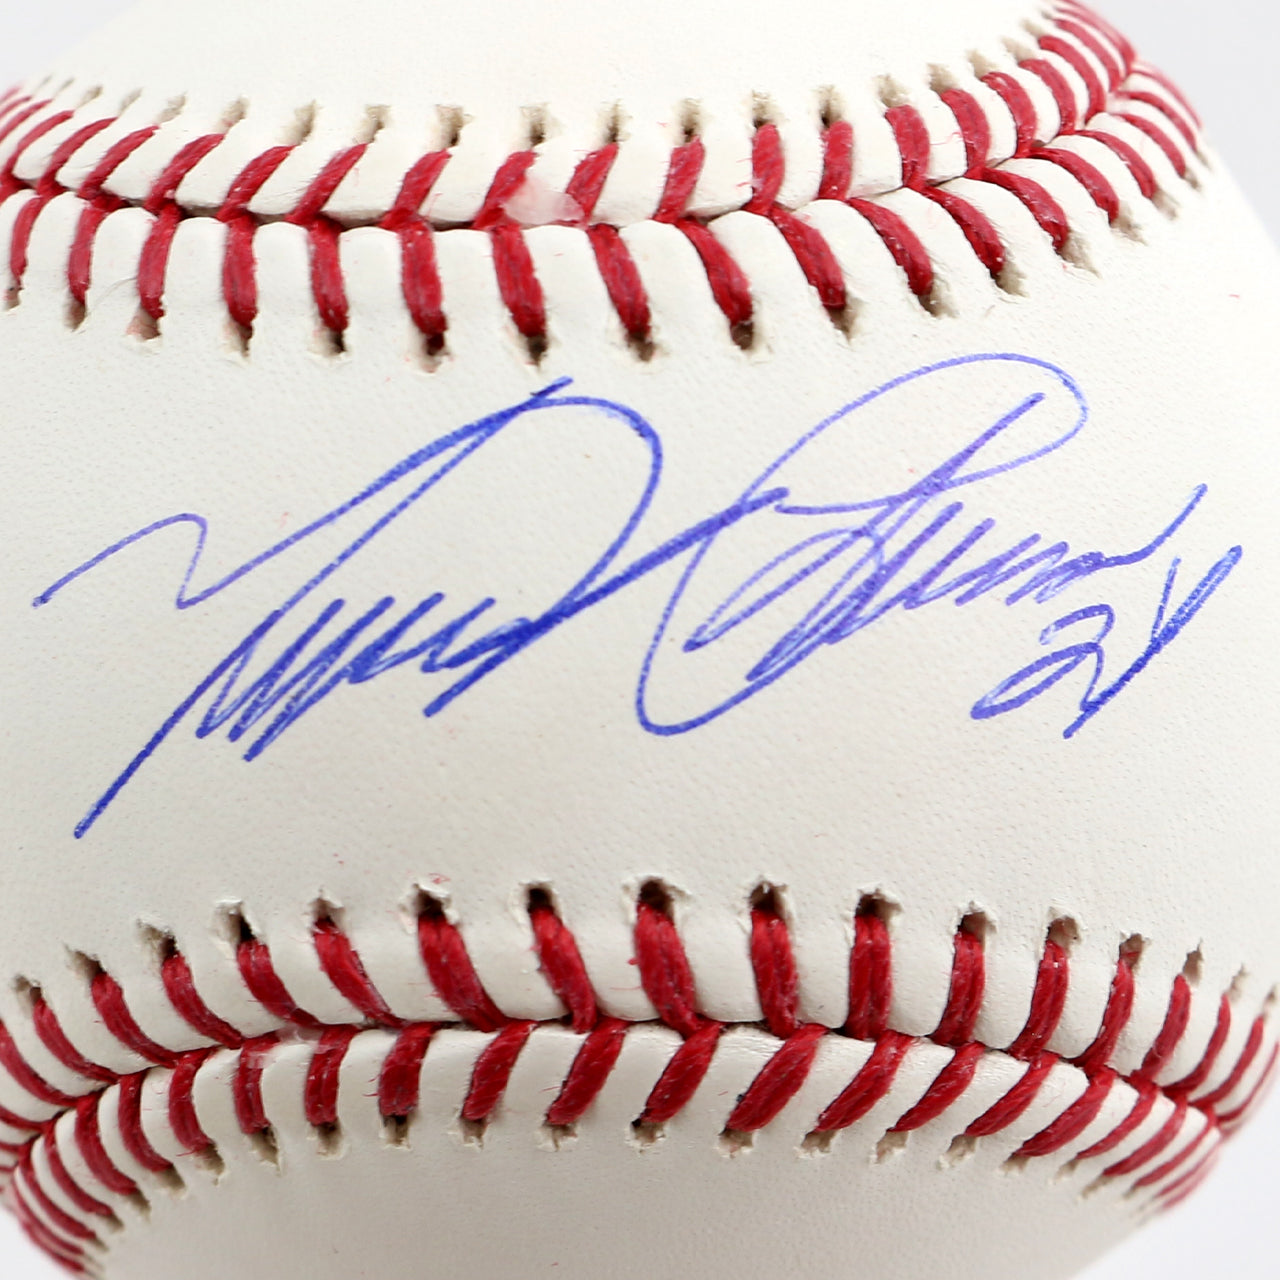 Miguel Cabrera Signed Official Major League Baseball